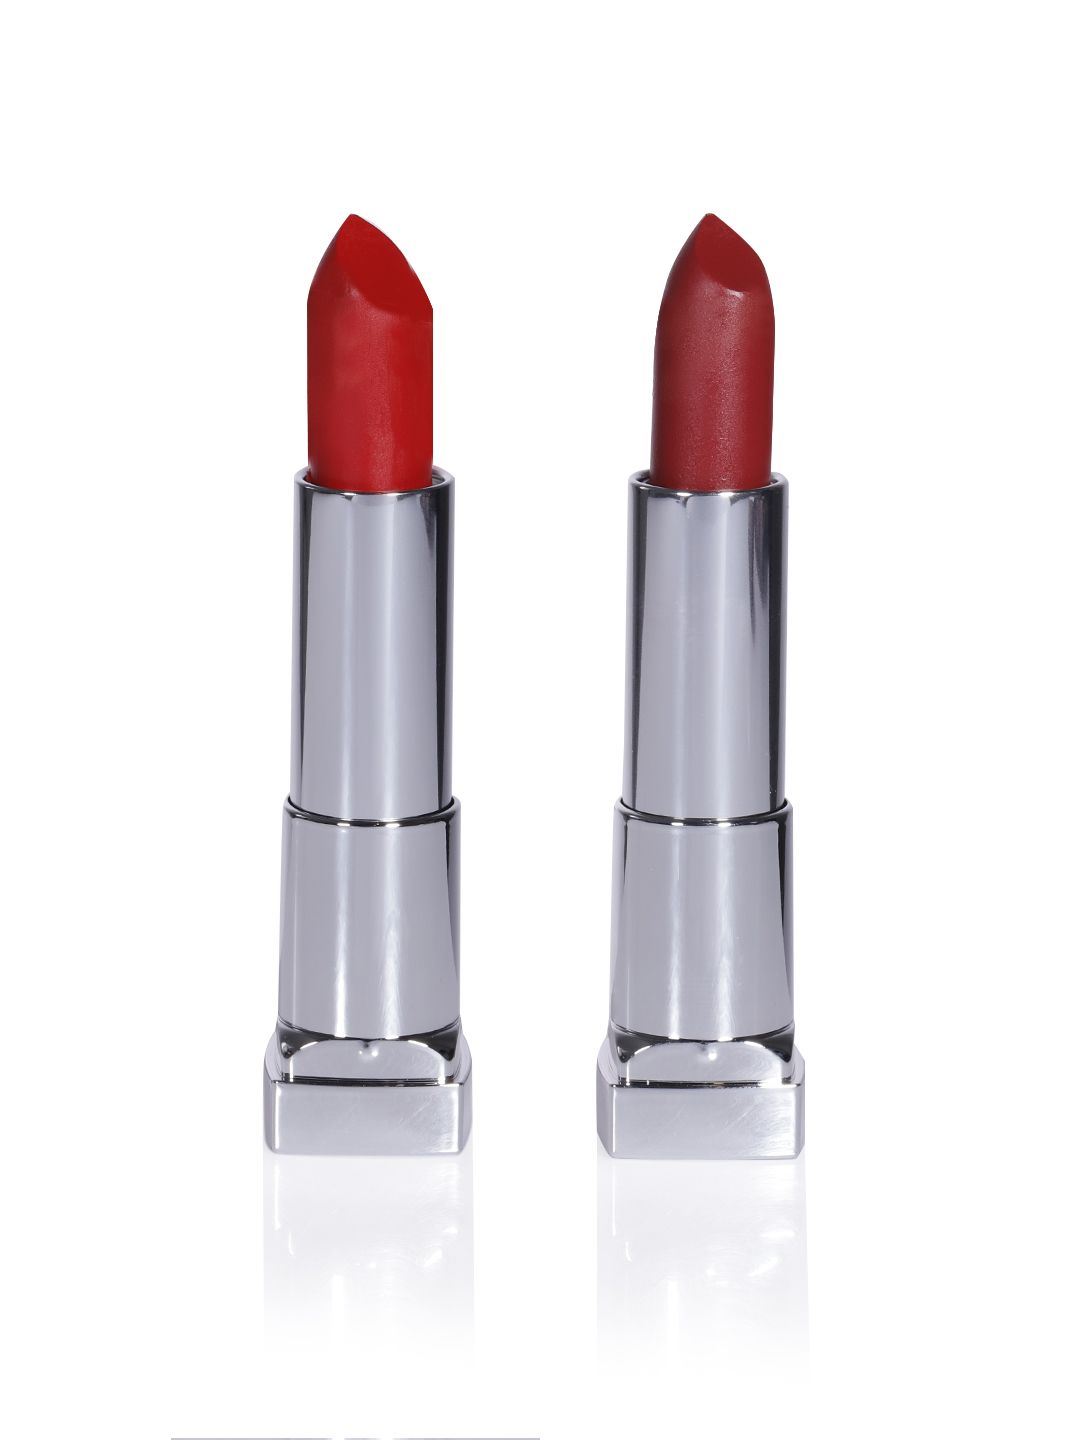 Maybelline New York Set of 2 Creamy Matte Lipsticks - Rich Ruby & Divine Wine Price in India